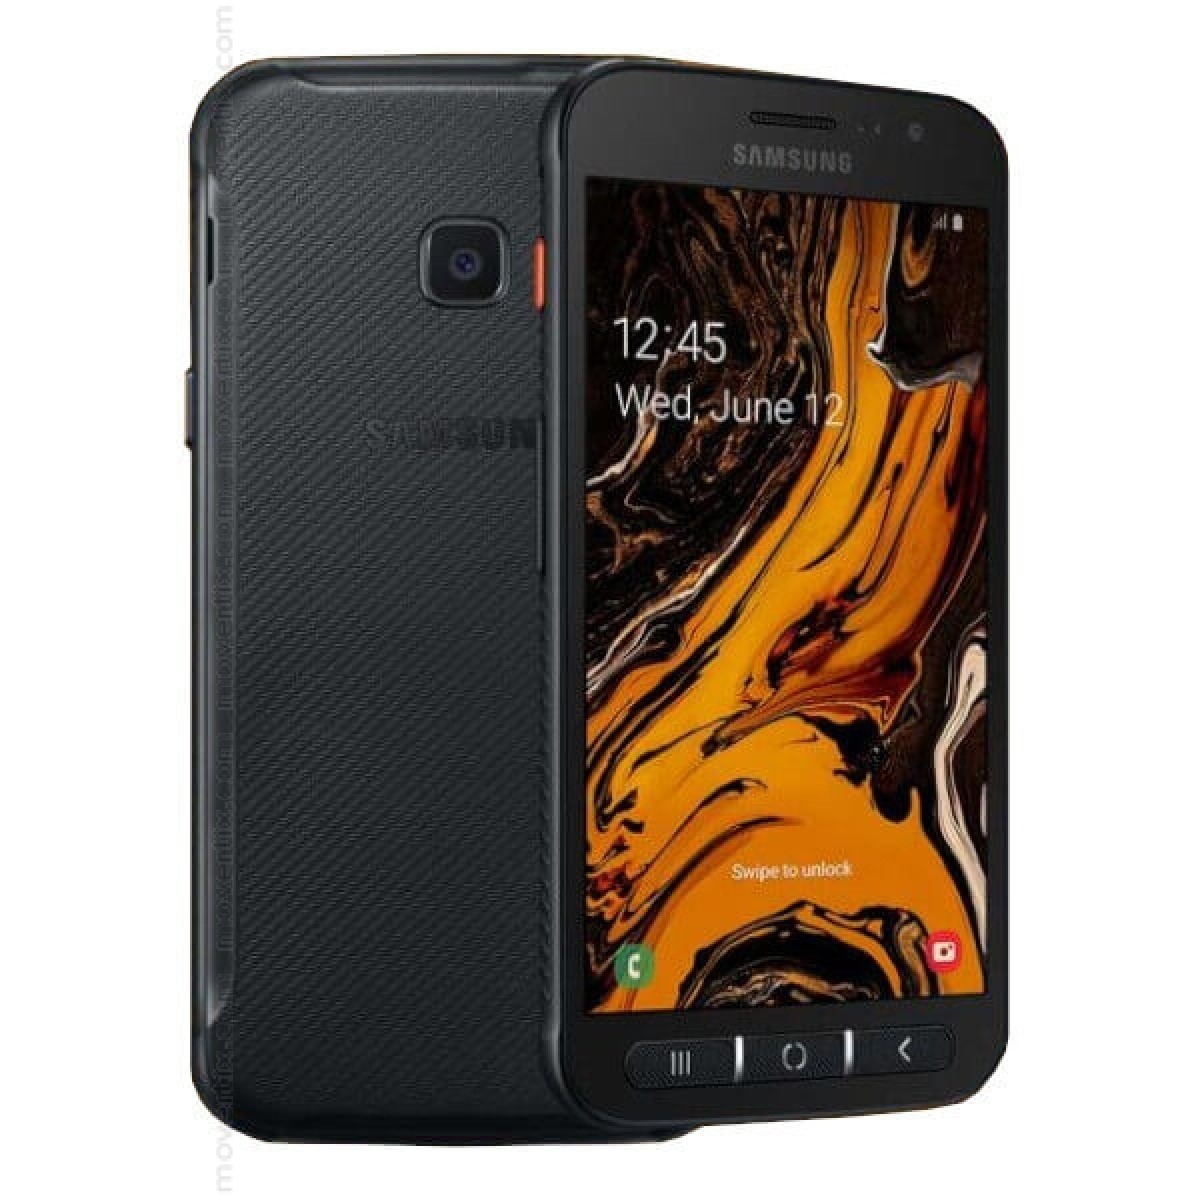 Samsung Galaxy Xcover 4s Dual SIM Black 